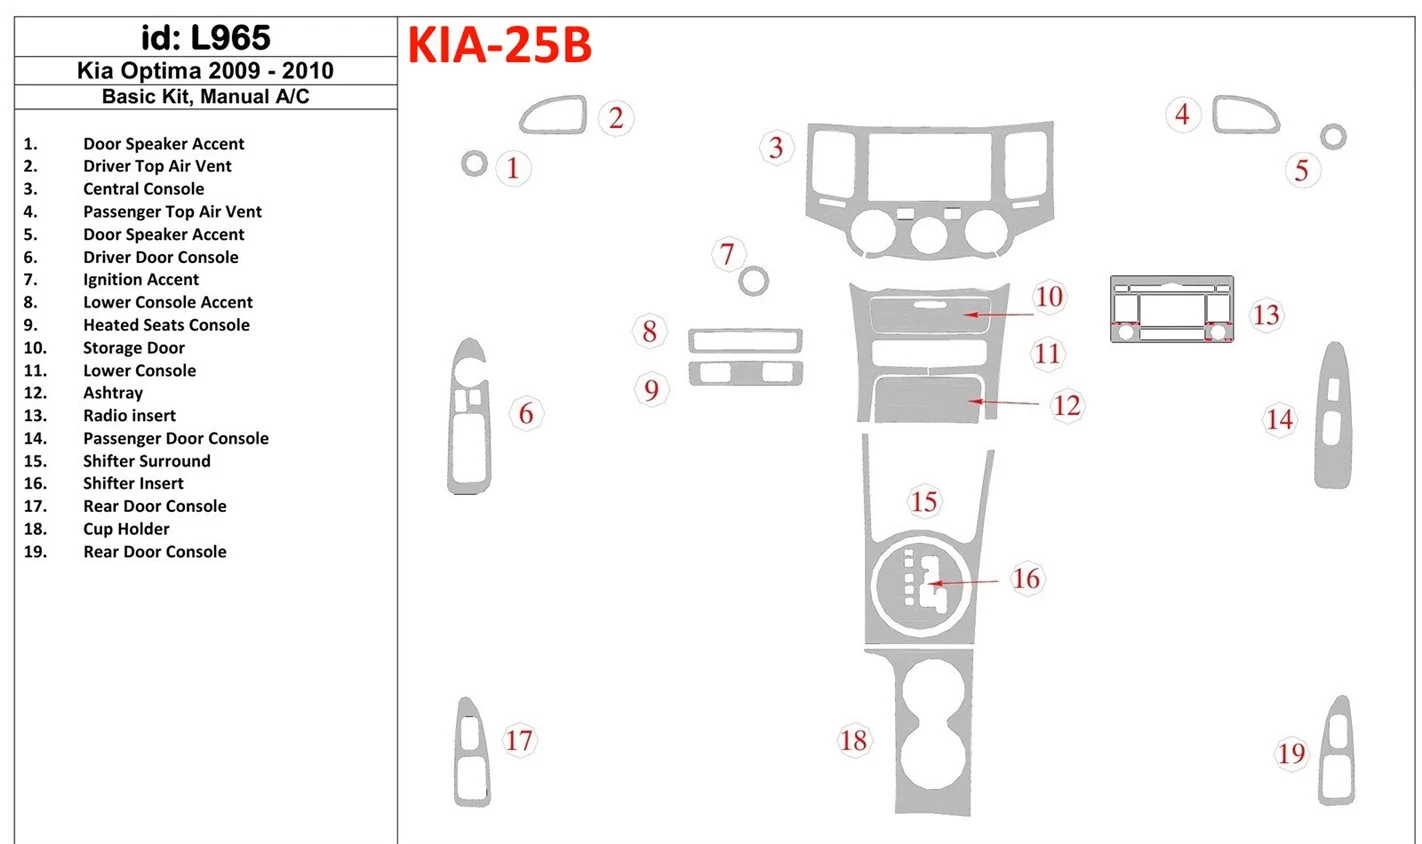 KIA Optima 2009-2010 Basic Set, Manual Gearbox AC Interior BD Dash Trim Kit